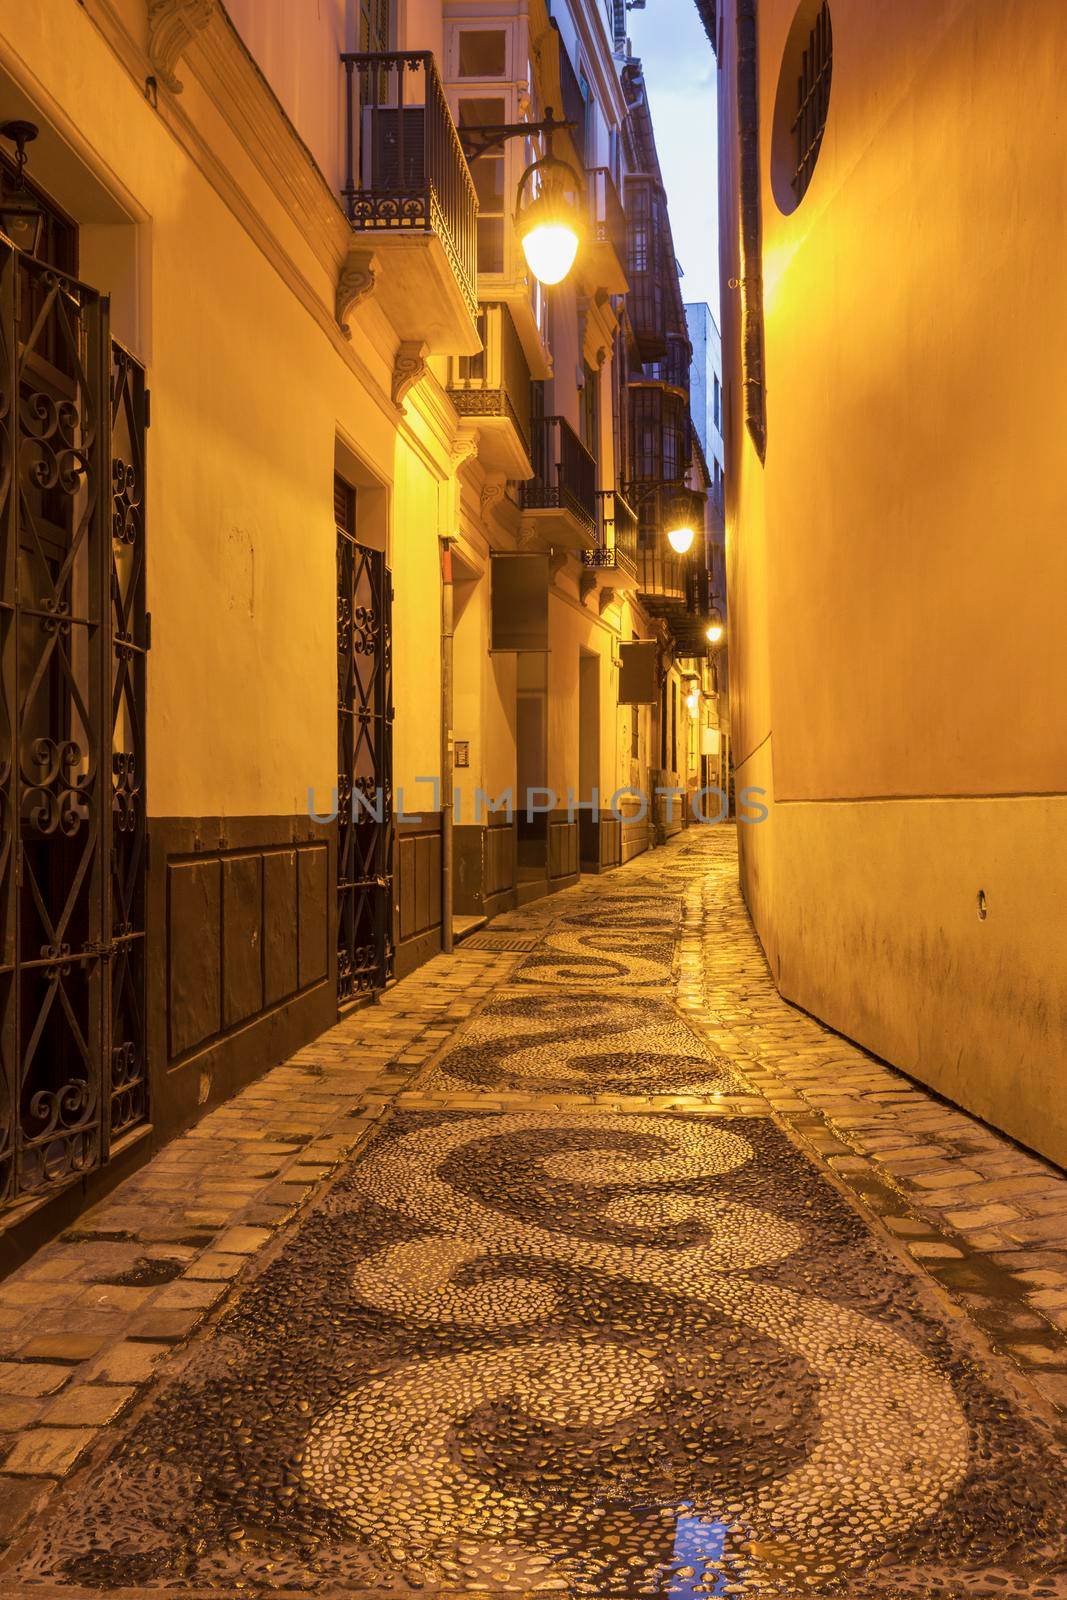 Streets of Malaga old town. Malaga, Andalusia, Spain.